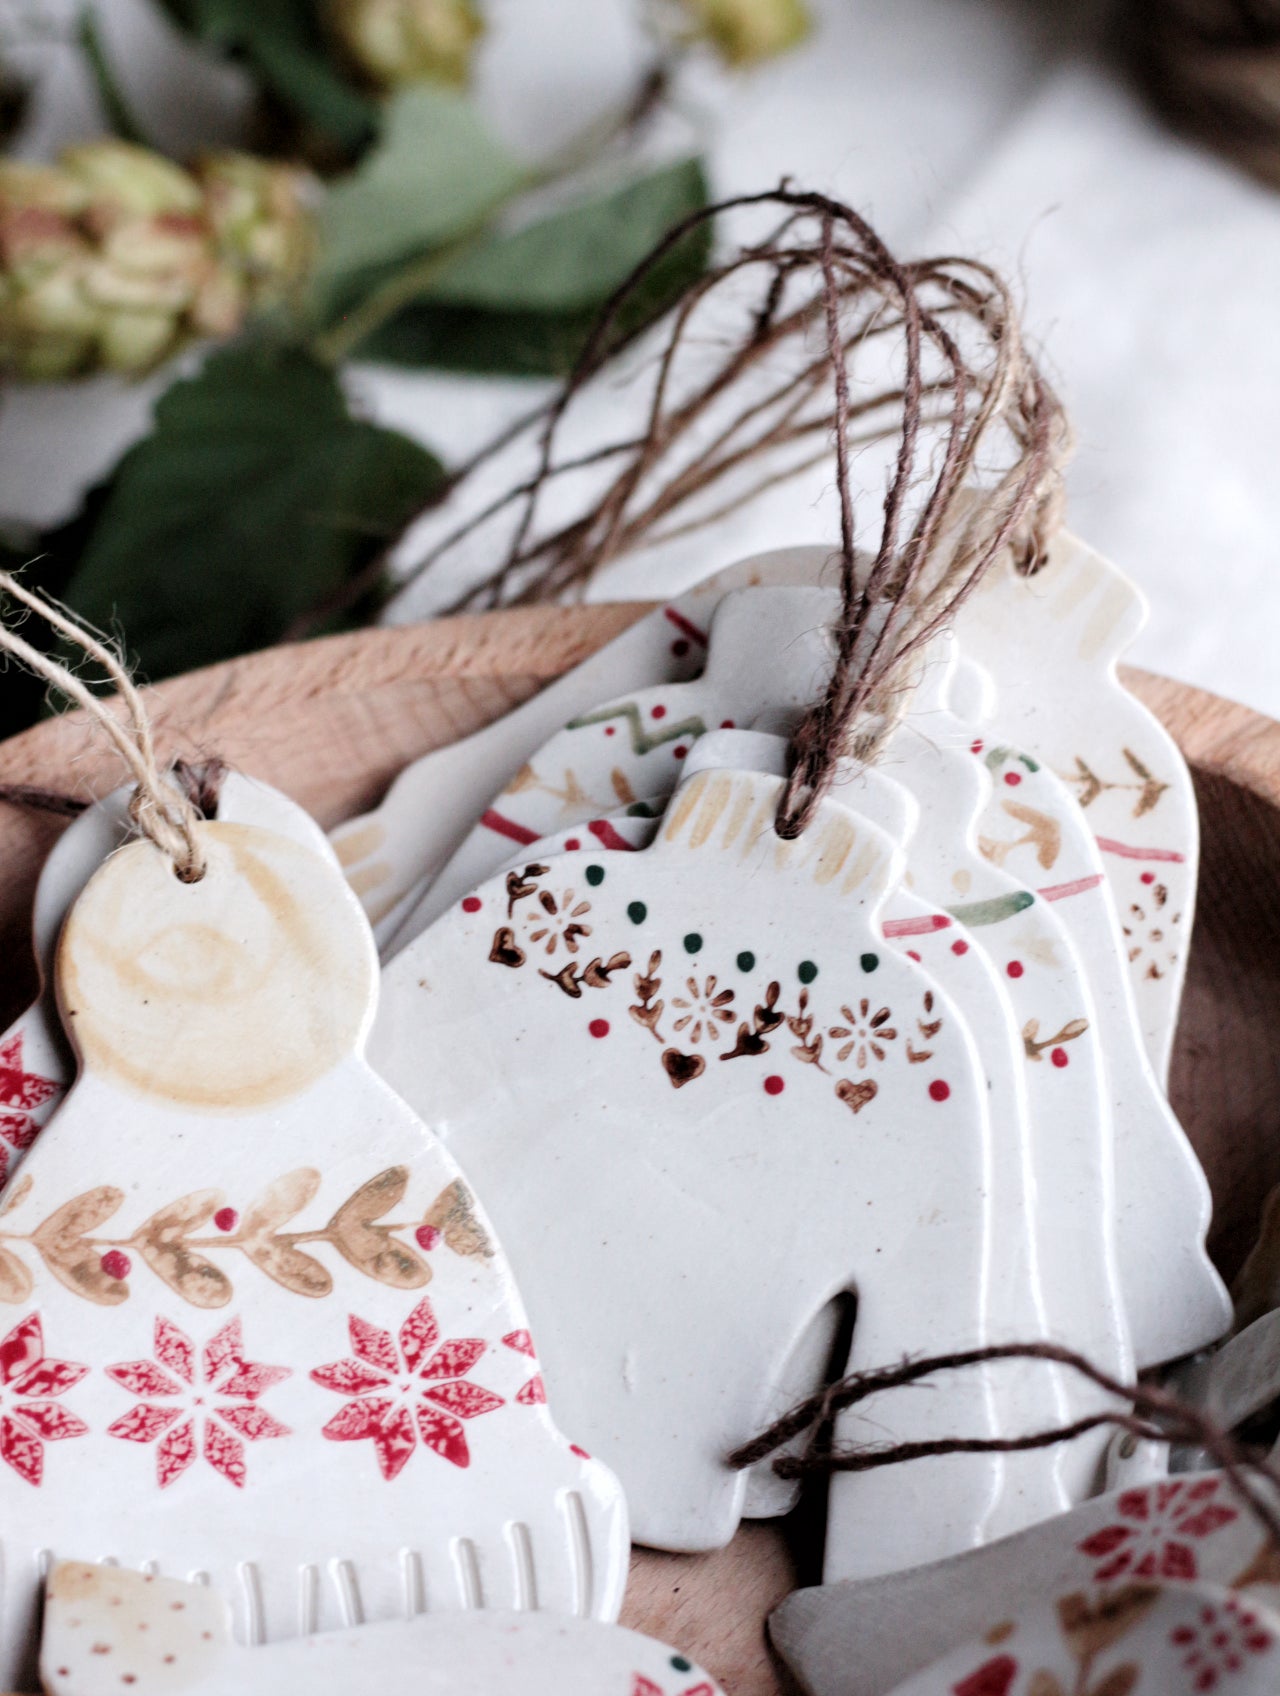 Decorazioni natalizie fatte a mano in ceramica